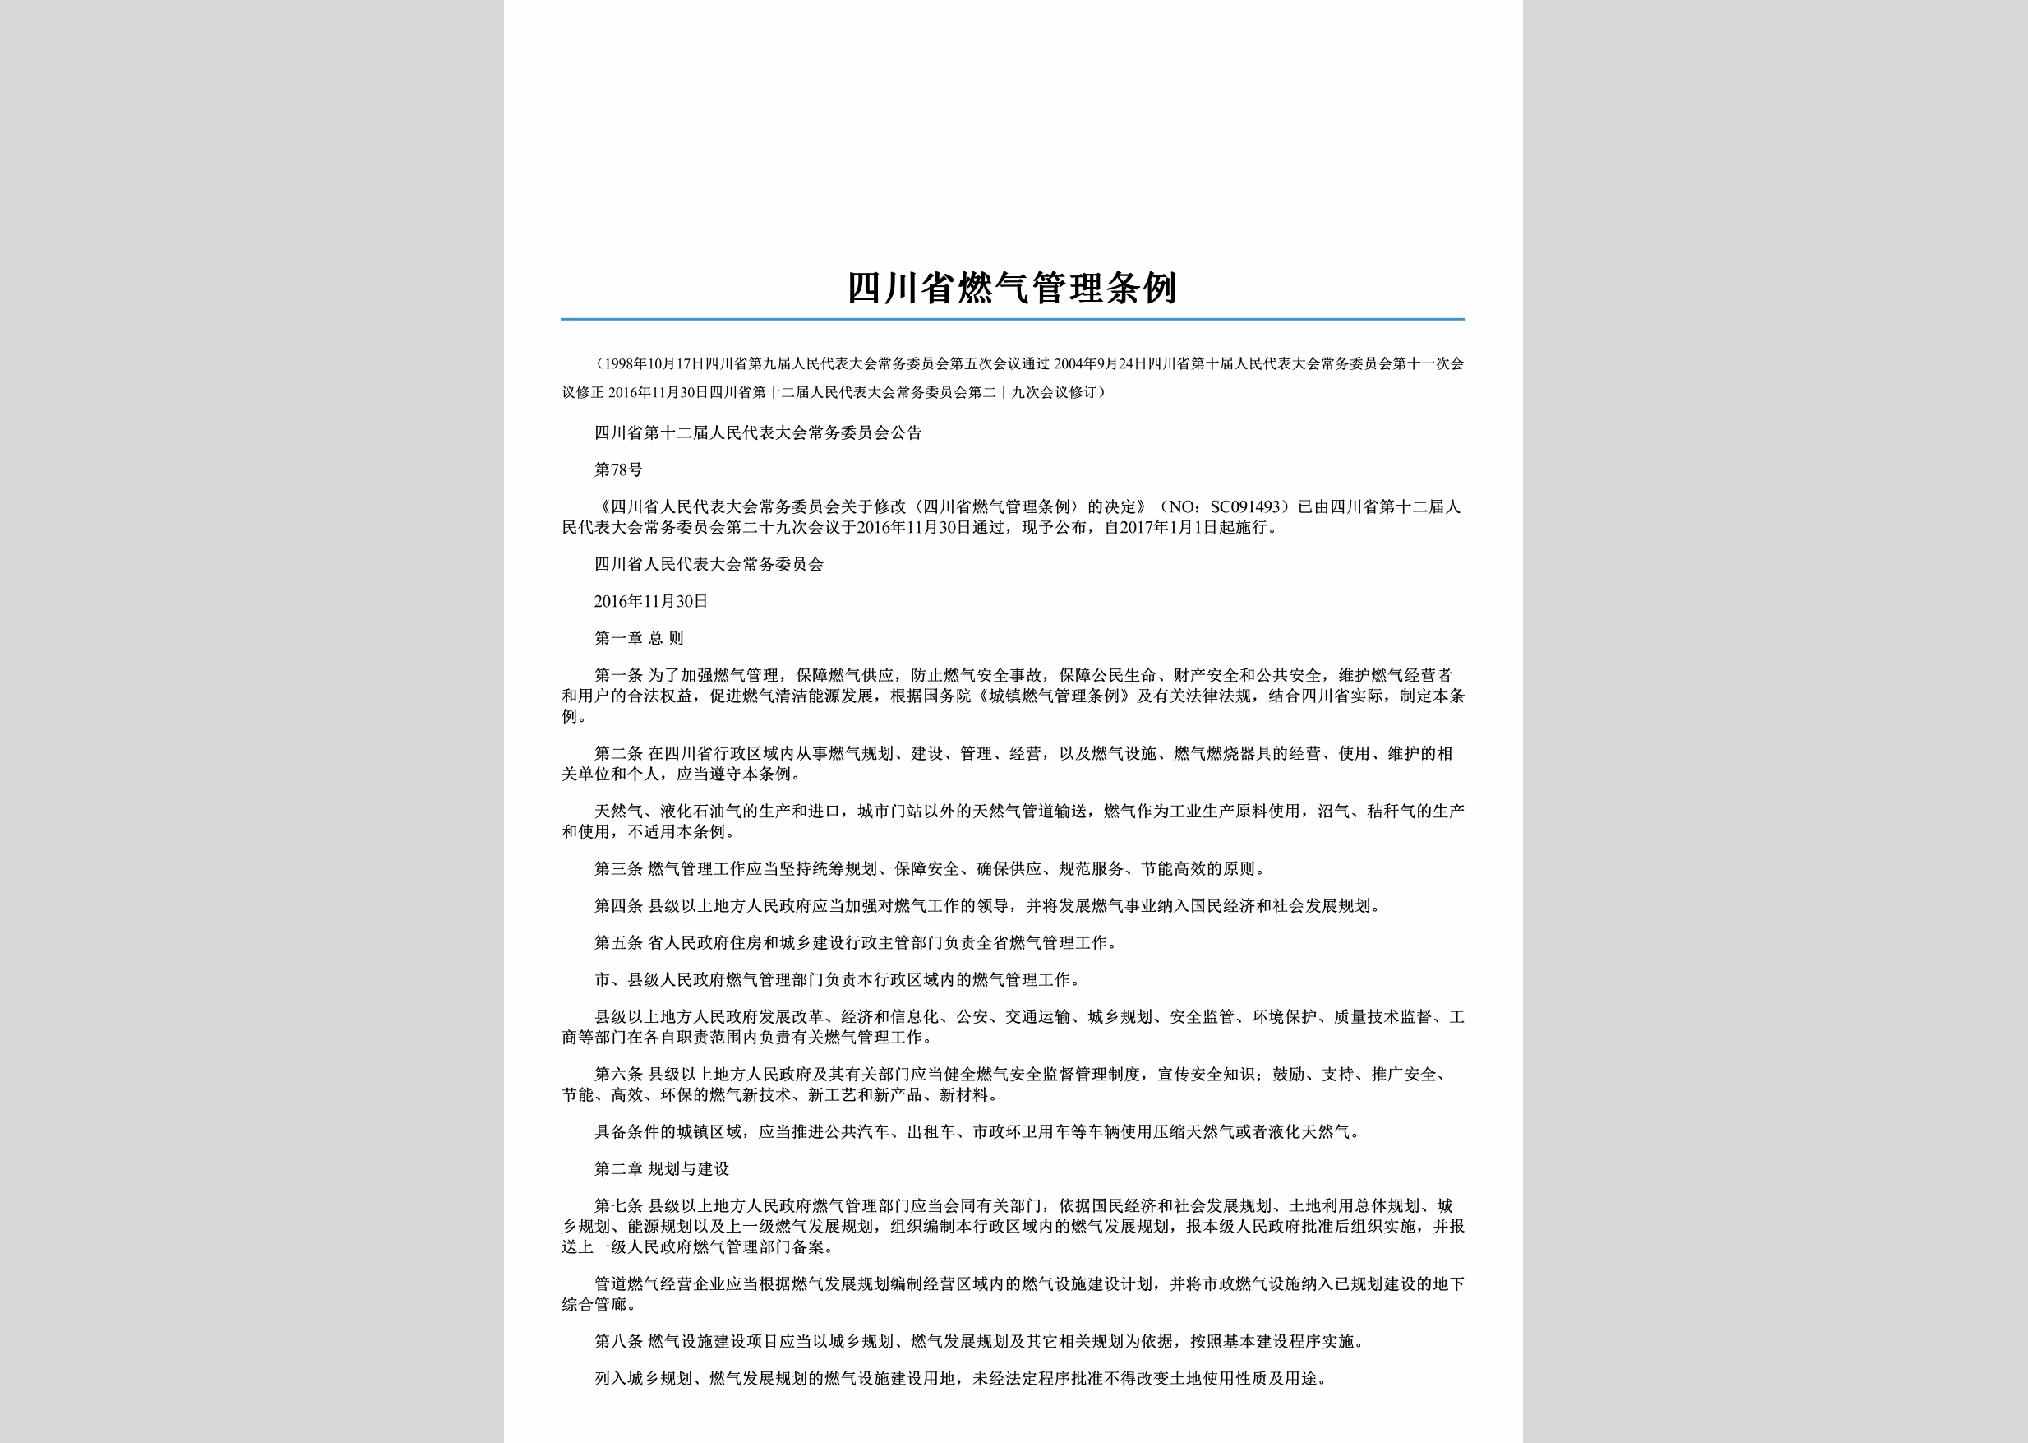 SC-RQGLTL-2017：四川省燃气管理条例